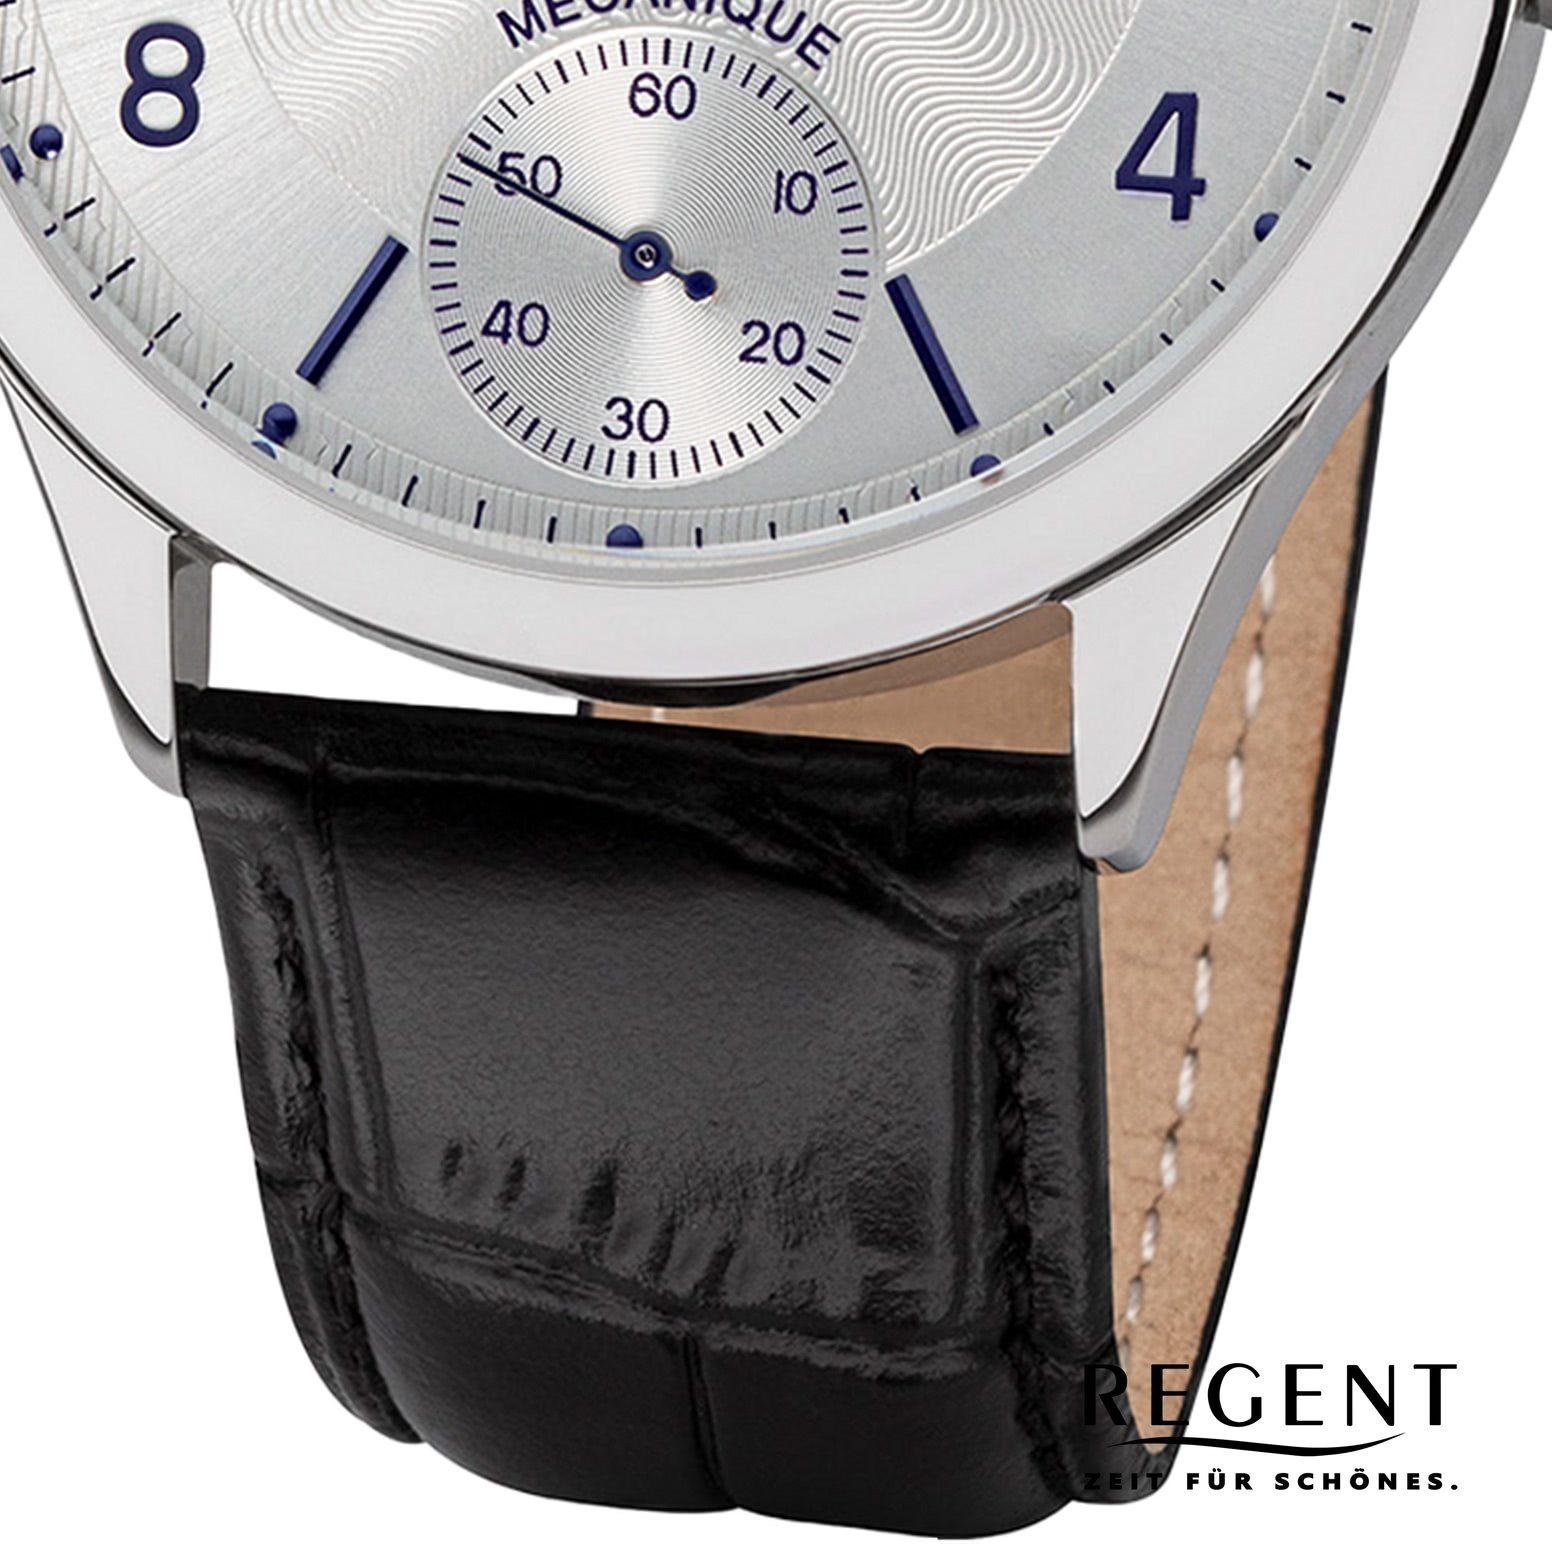 Herren Armbanduhr Analoganzeige, Armbanduhr Regent rund, Regent (ca. Herren Lederbandarmband 42,5mm), Quarzuhr groß